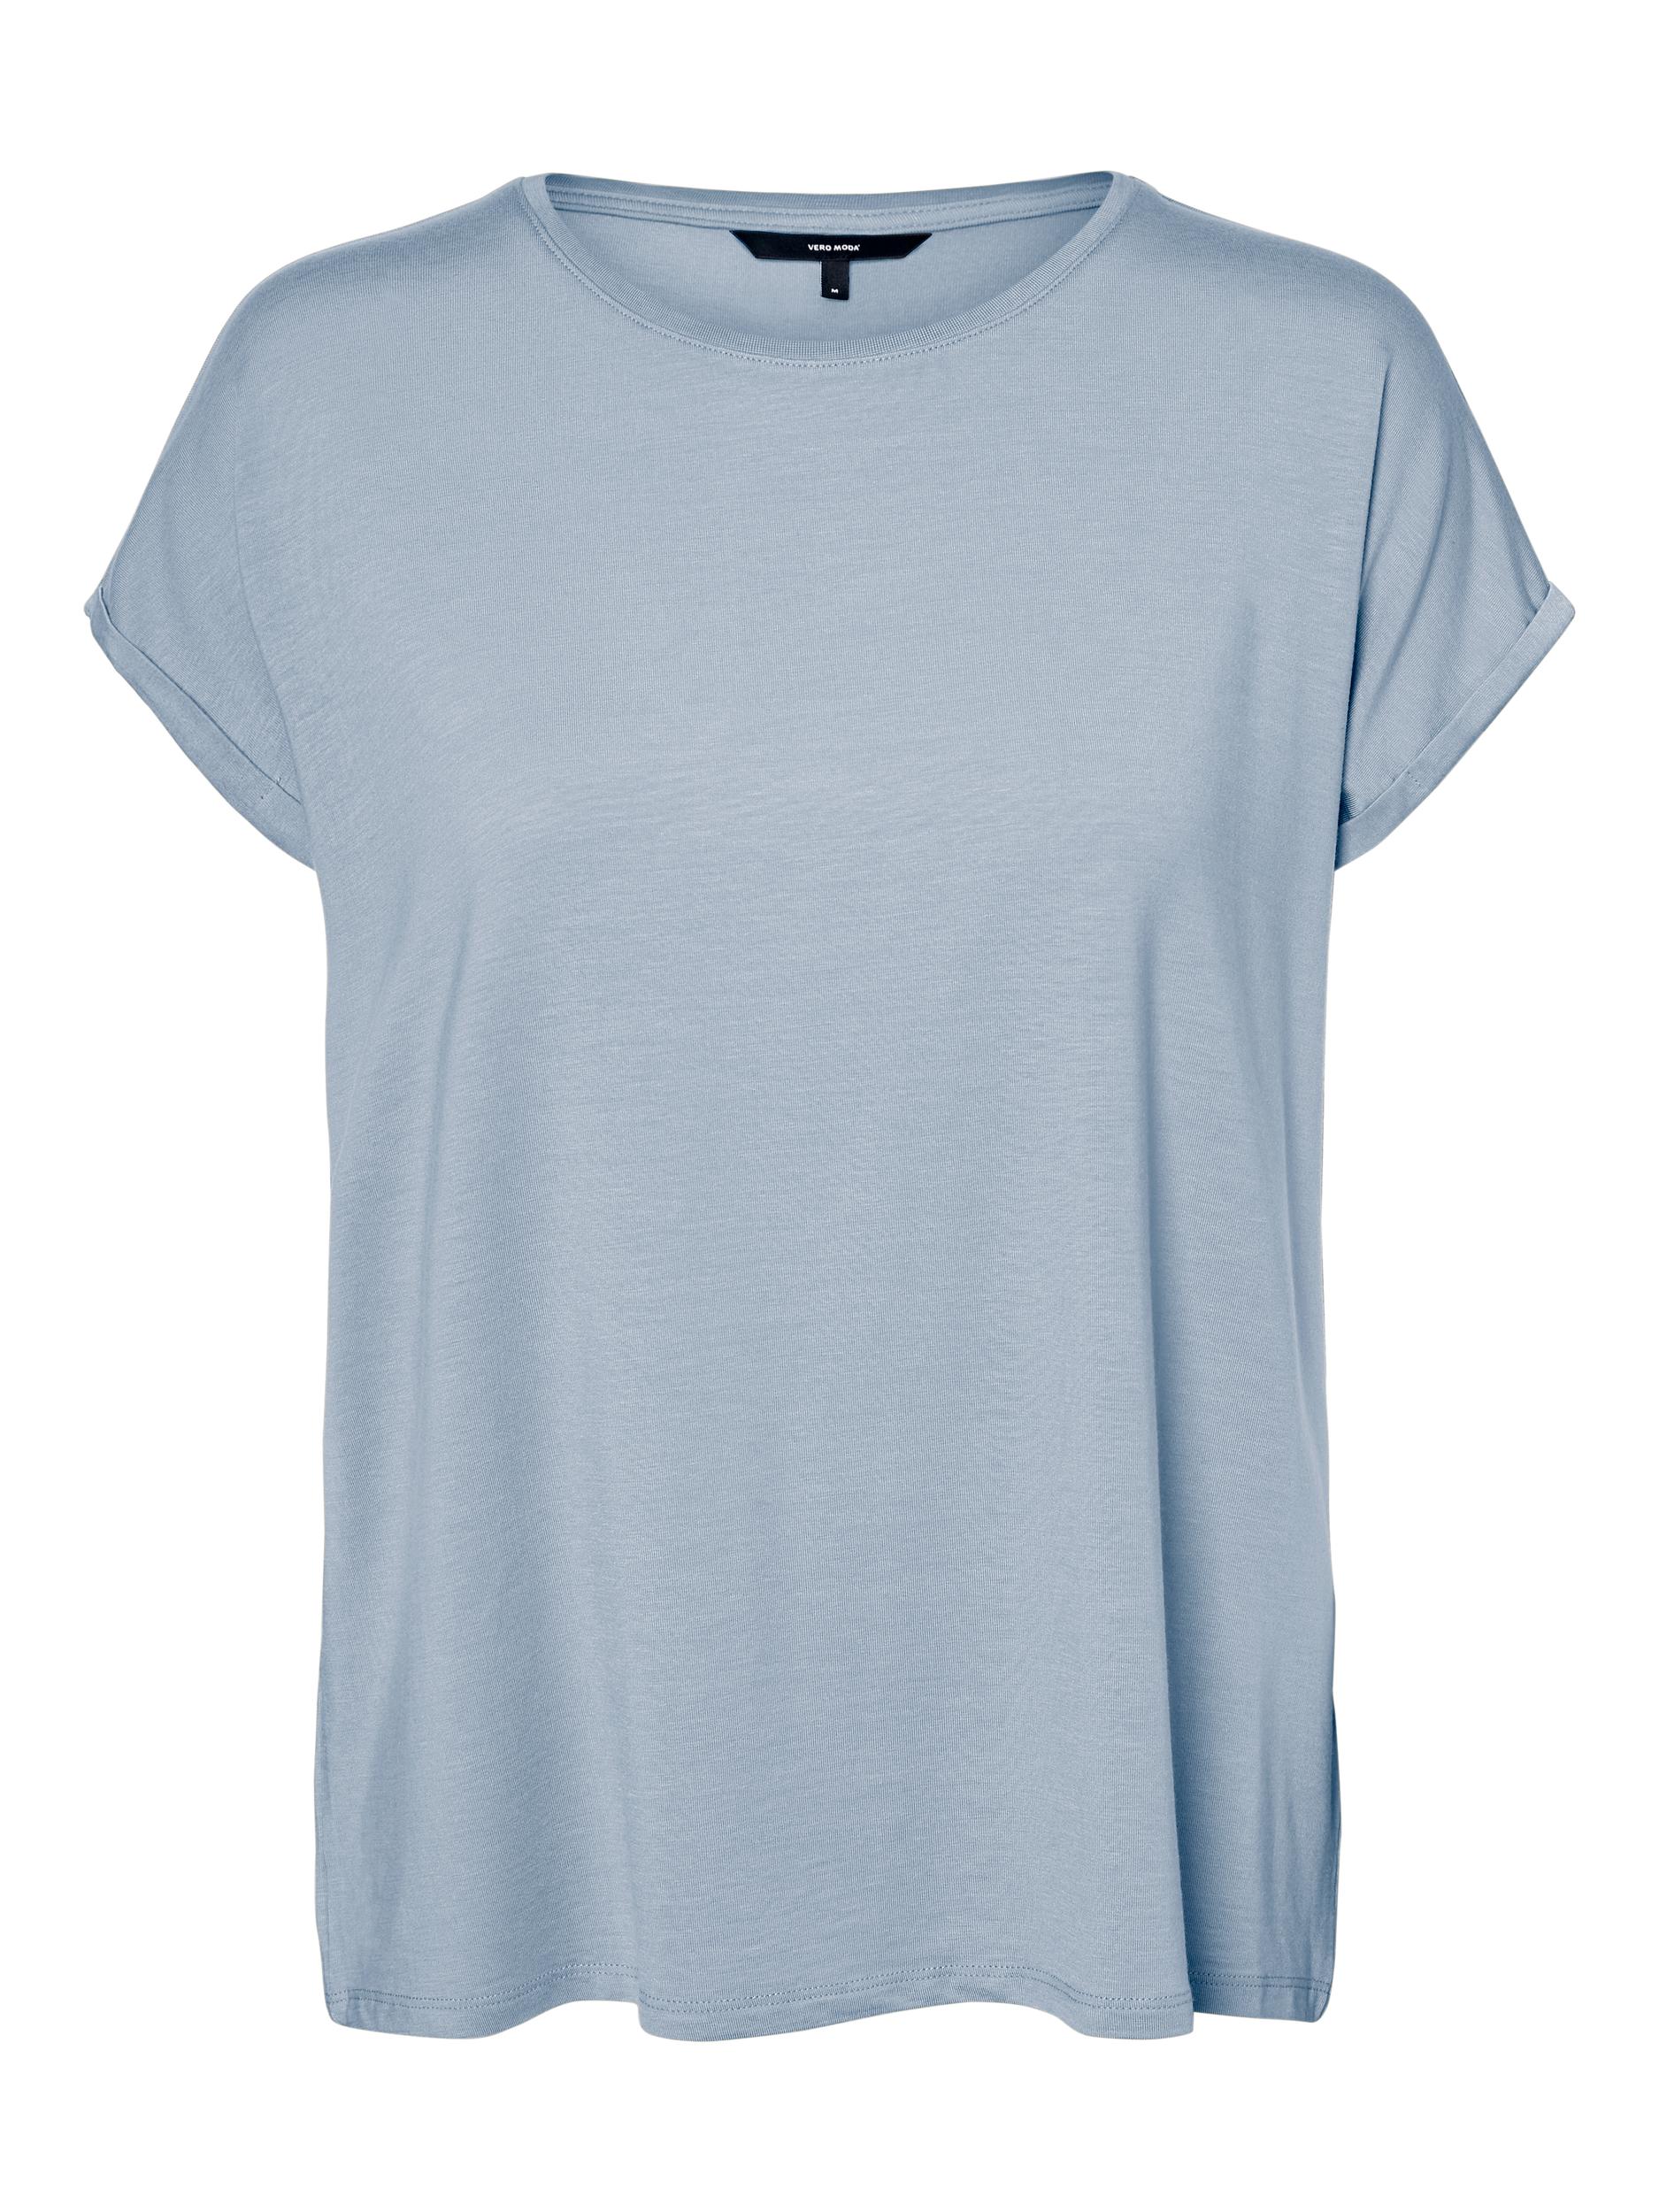 AWARE | Ava T-Shirt, BLUE FOG, large